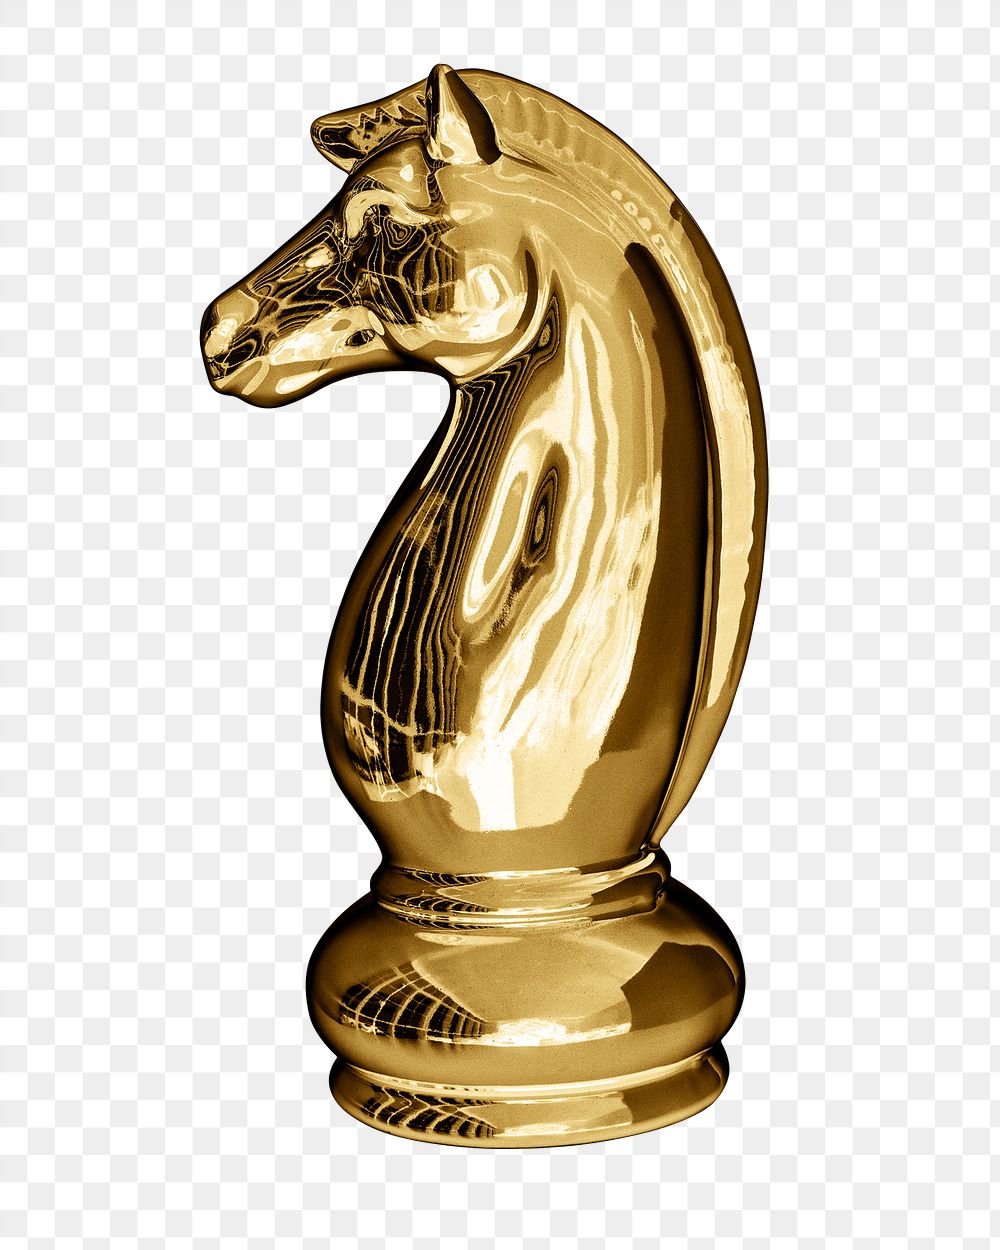 Gold knight chess piece design element